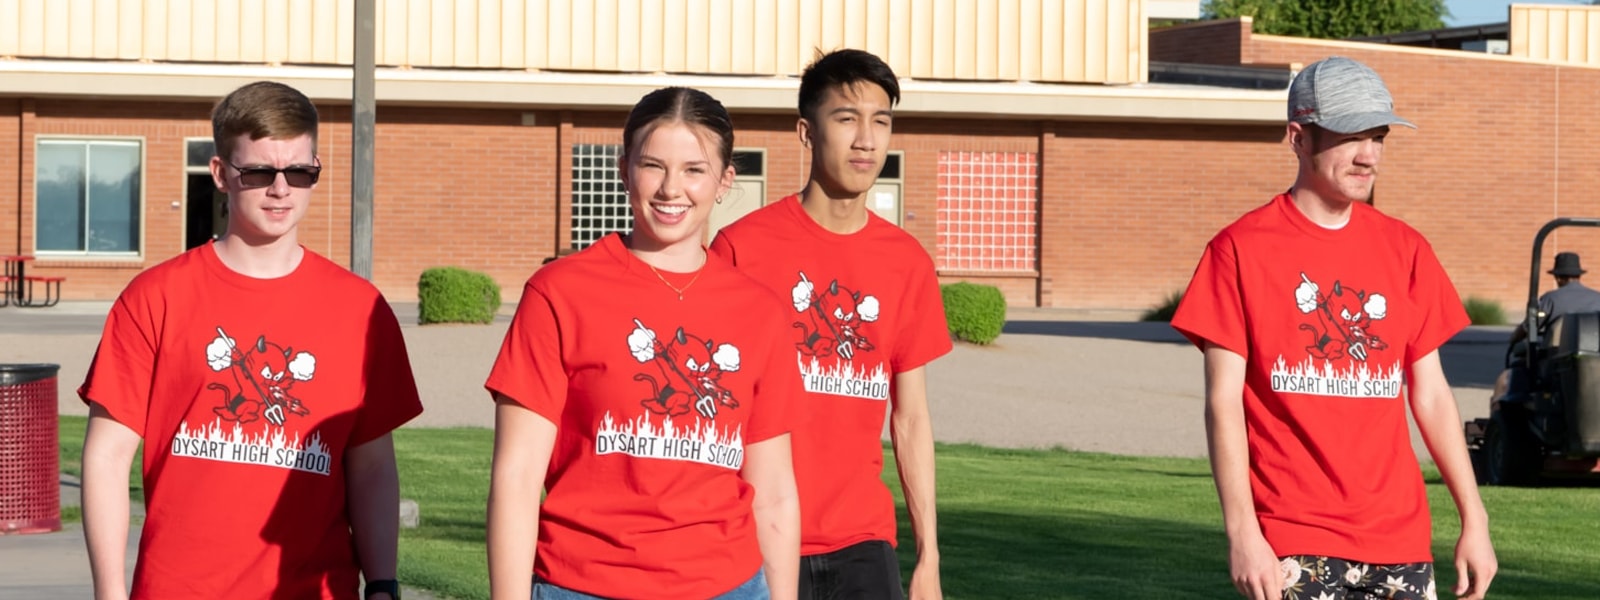 Students wearing Dysart High School shirts.